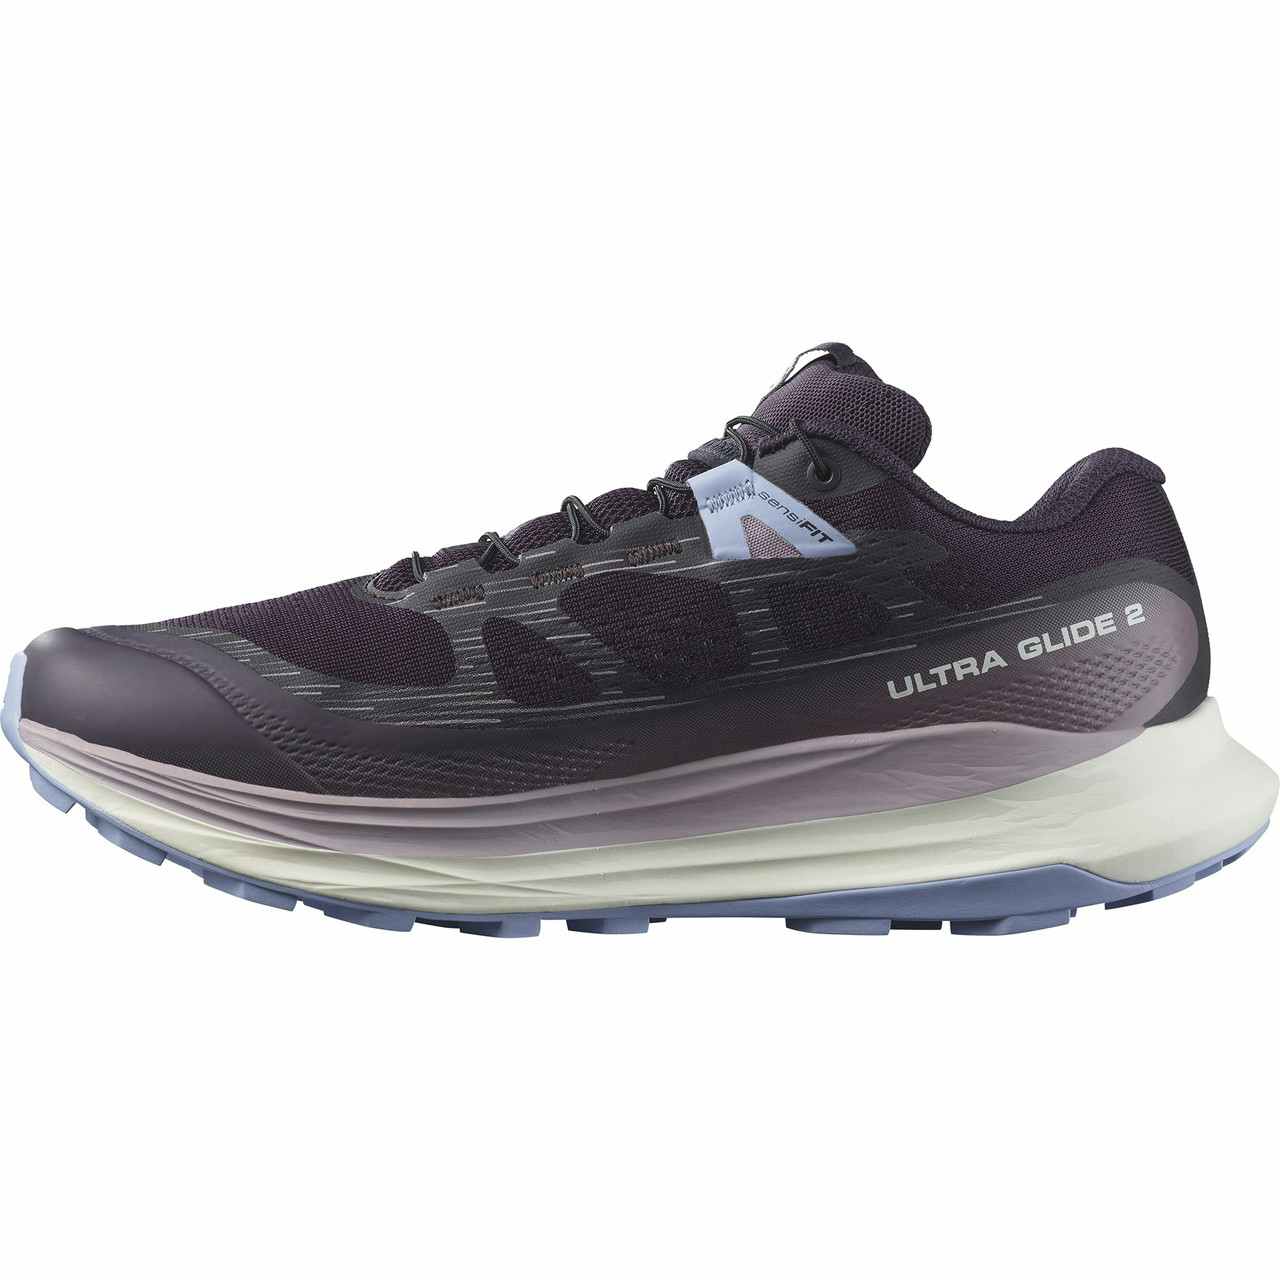 Ultra Glide 2 Trail Running Shoes Nightshade/Vanilla Ice/Se